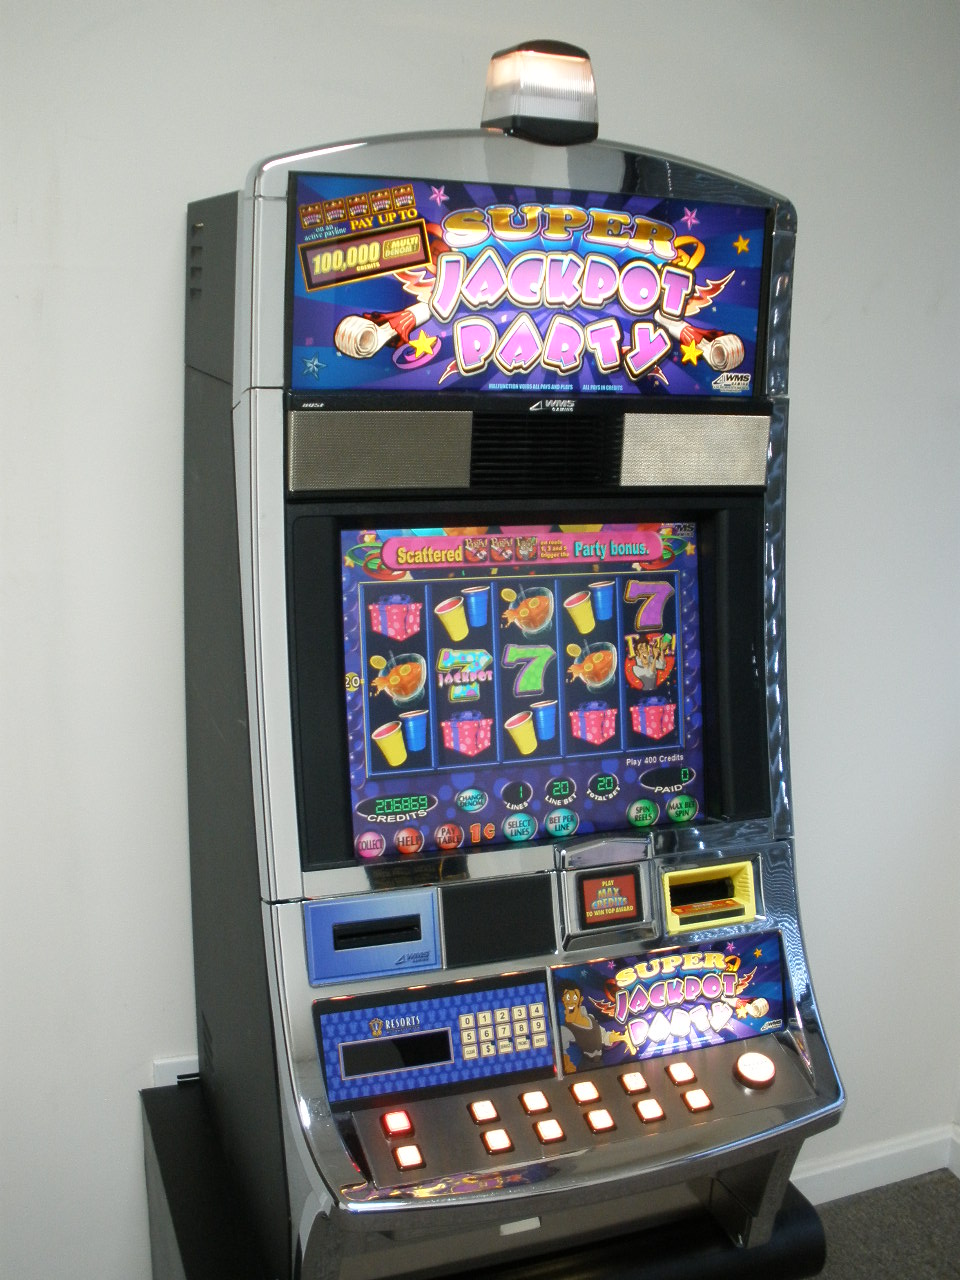 WMS Super Jackpot Party Video Slot Machine For Sale • Gambler's Oasis USA